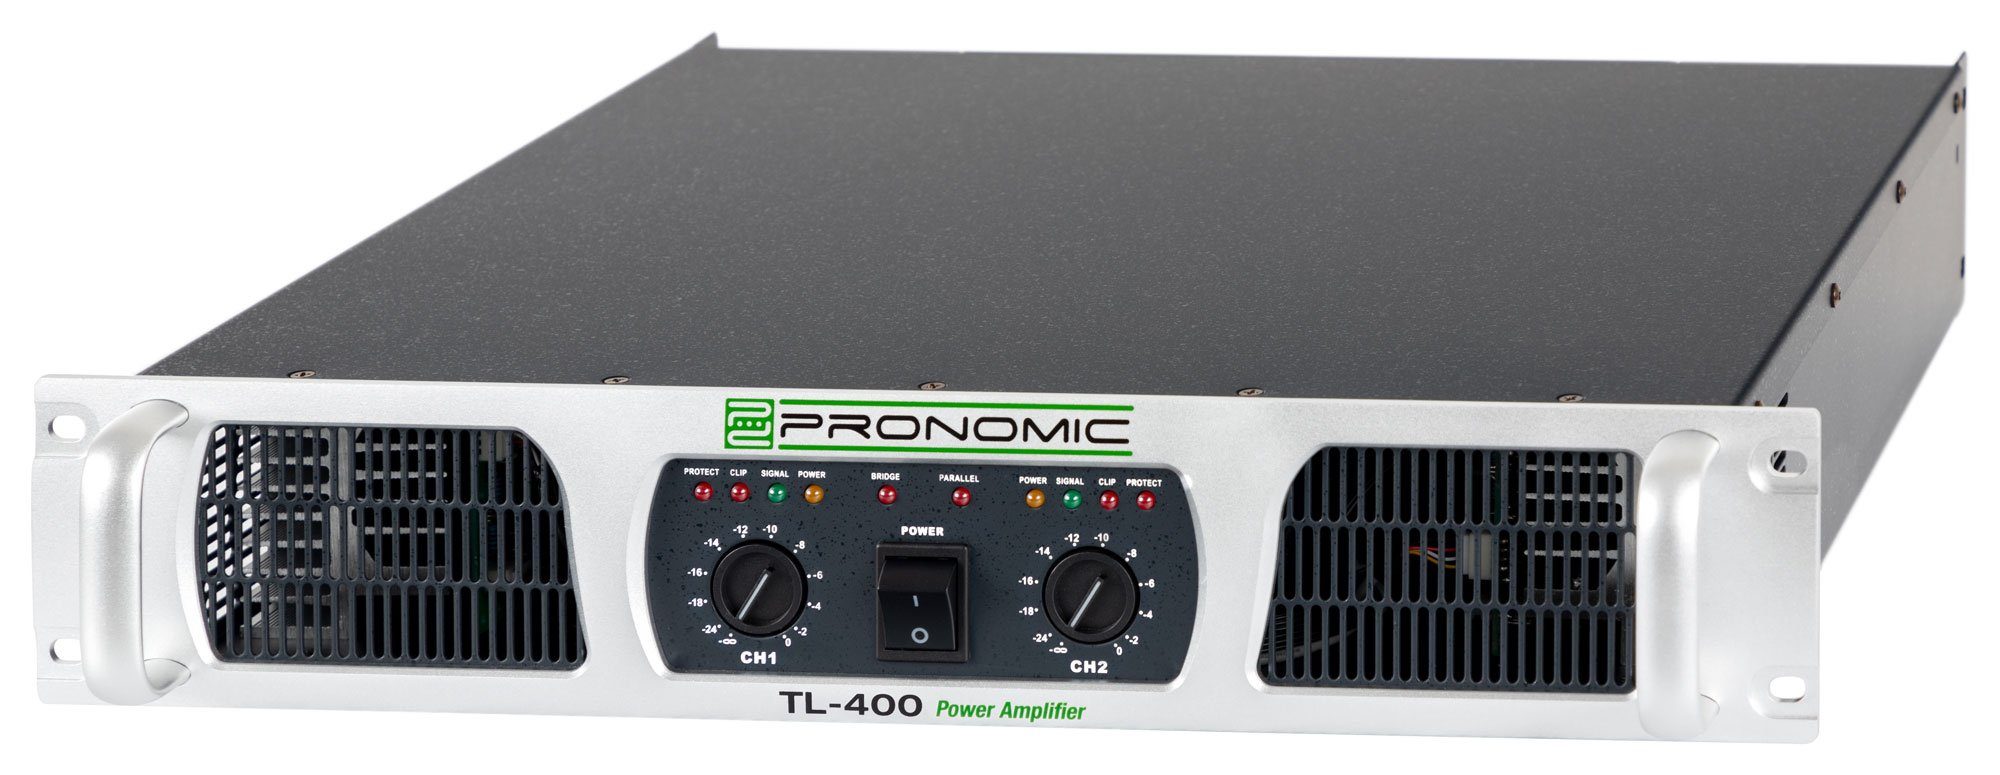 Schraubklemmen, 1000 an Verstärker TL-400 W, Pronomic Lautsprecher- mit Stereo-Leistungsverstärker (Anzahl 2 Ohm) Kanäle: Endstufe Kanal 2000 2 2x Watt